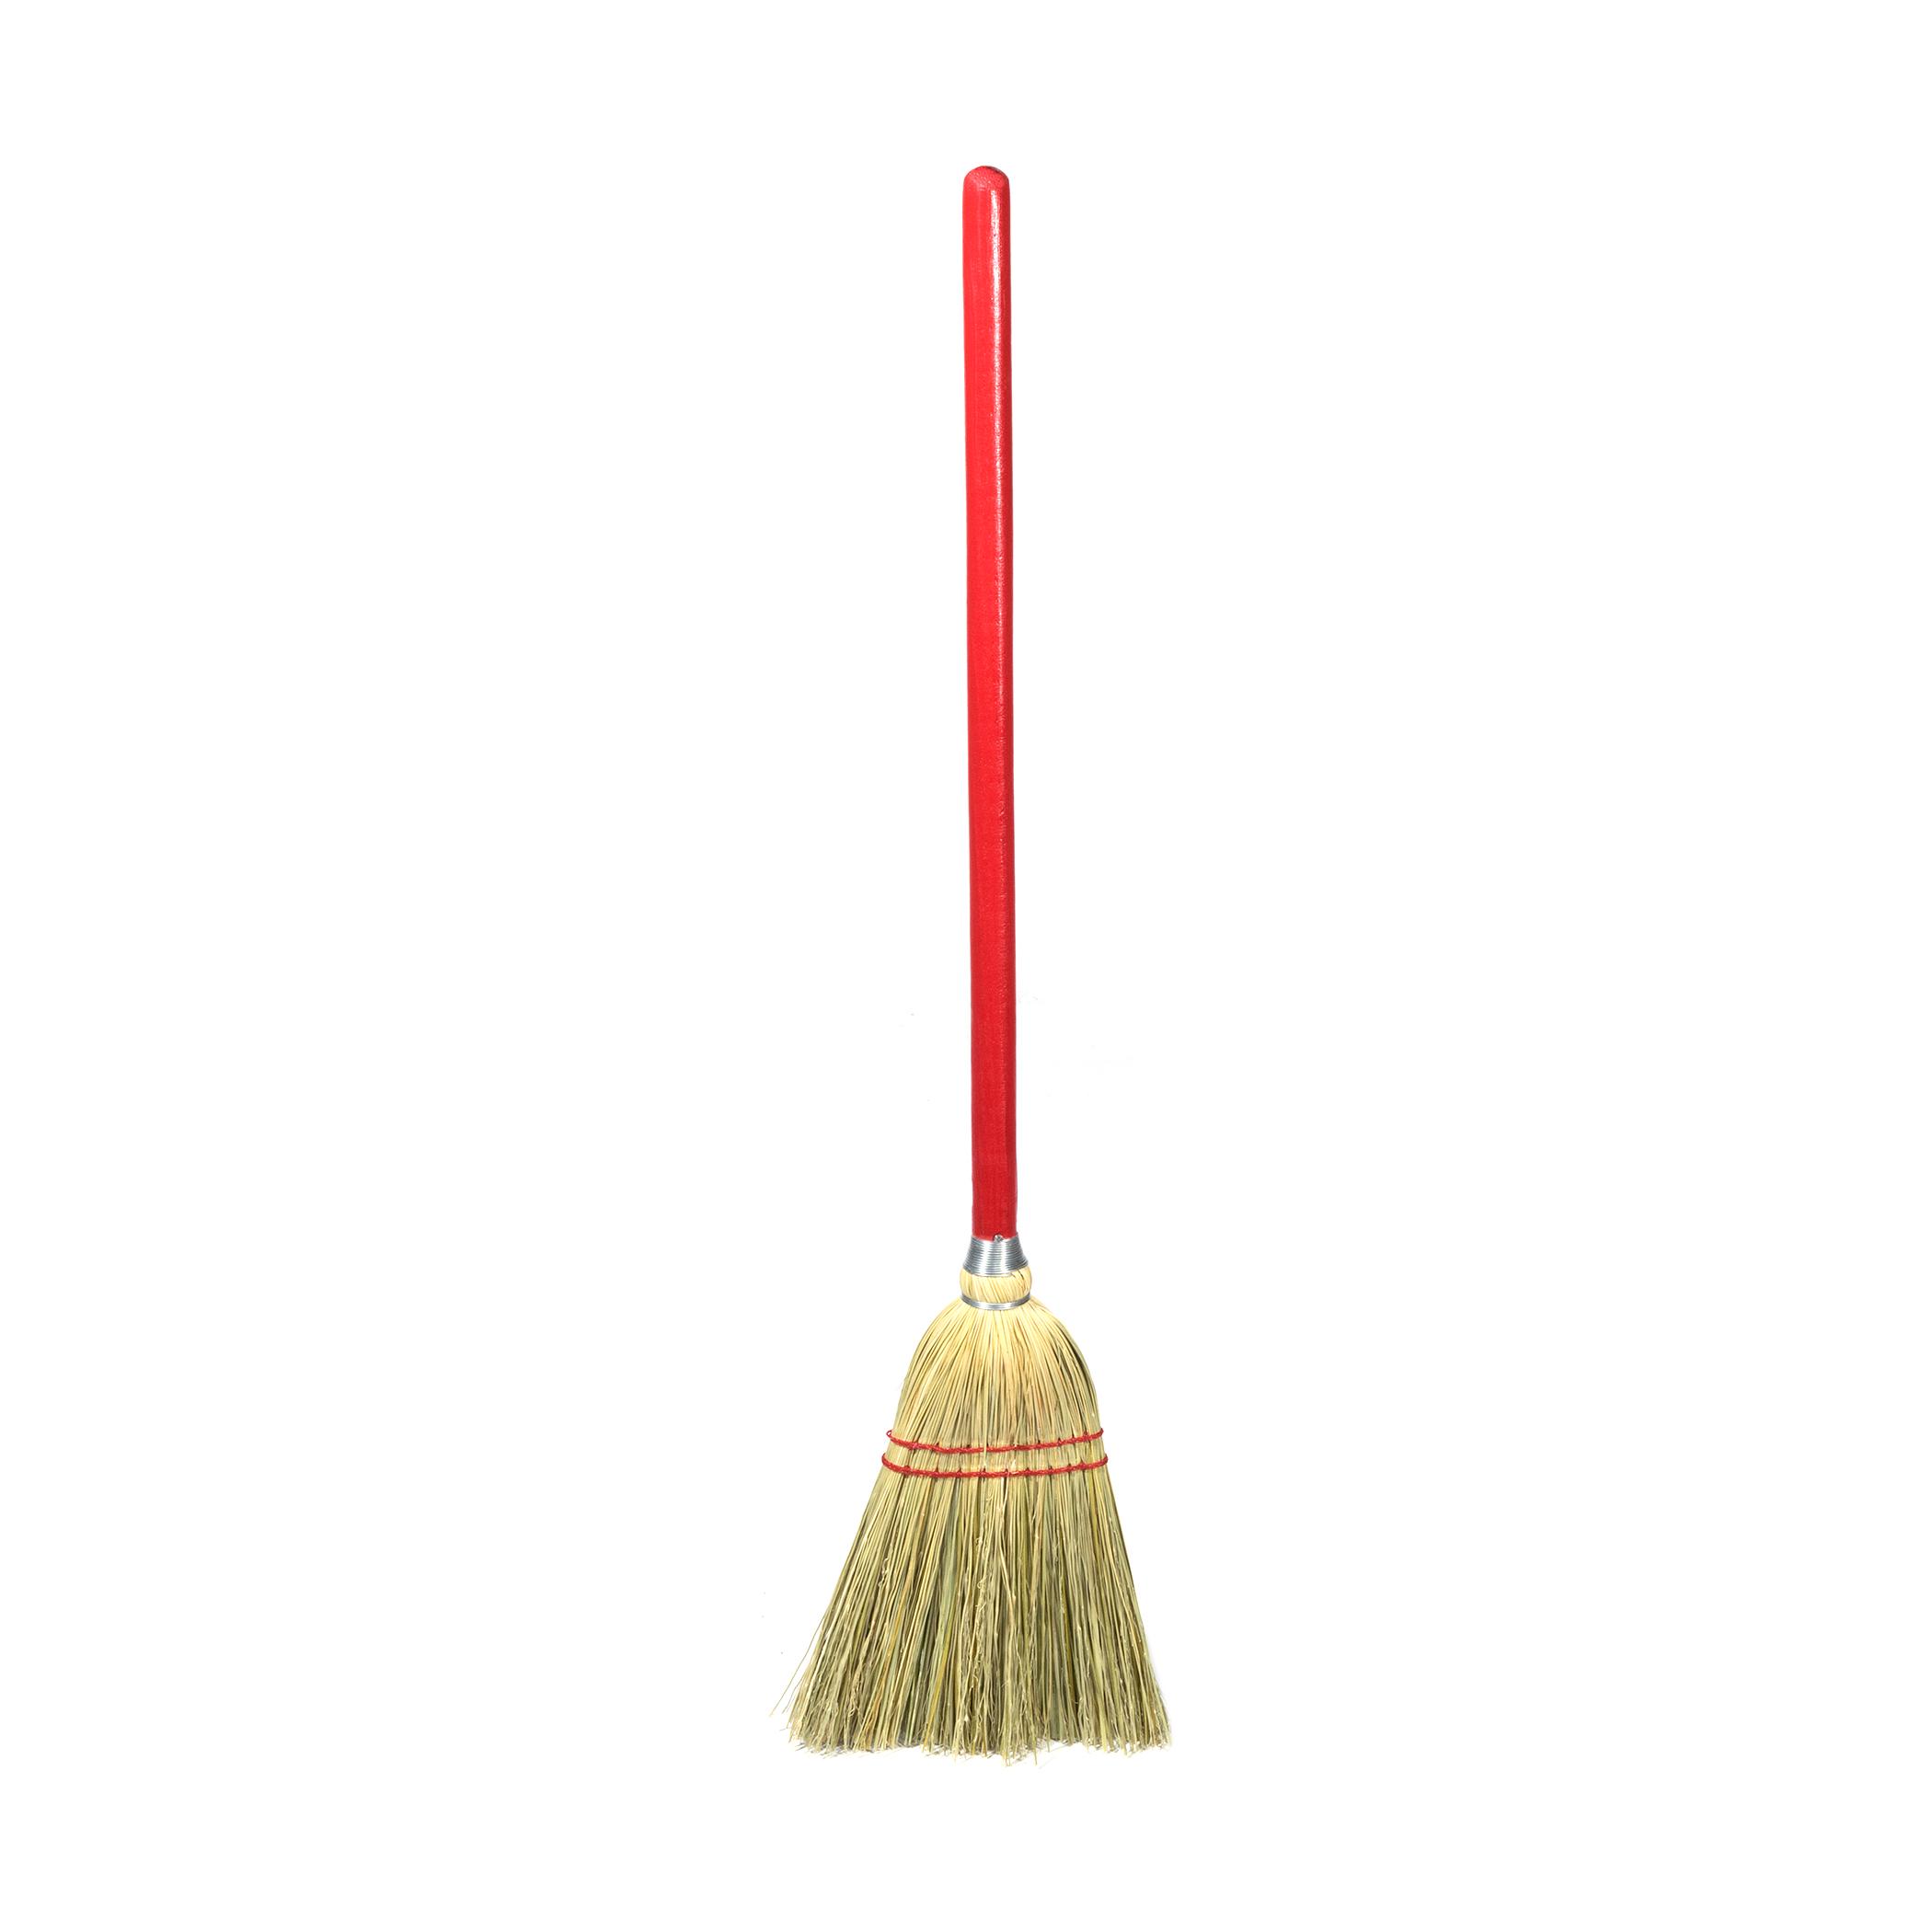 Download Image Of A Broom Nomer 20